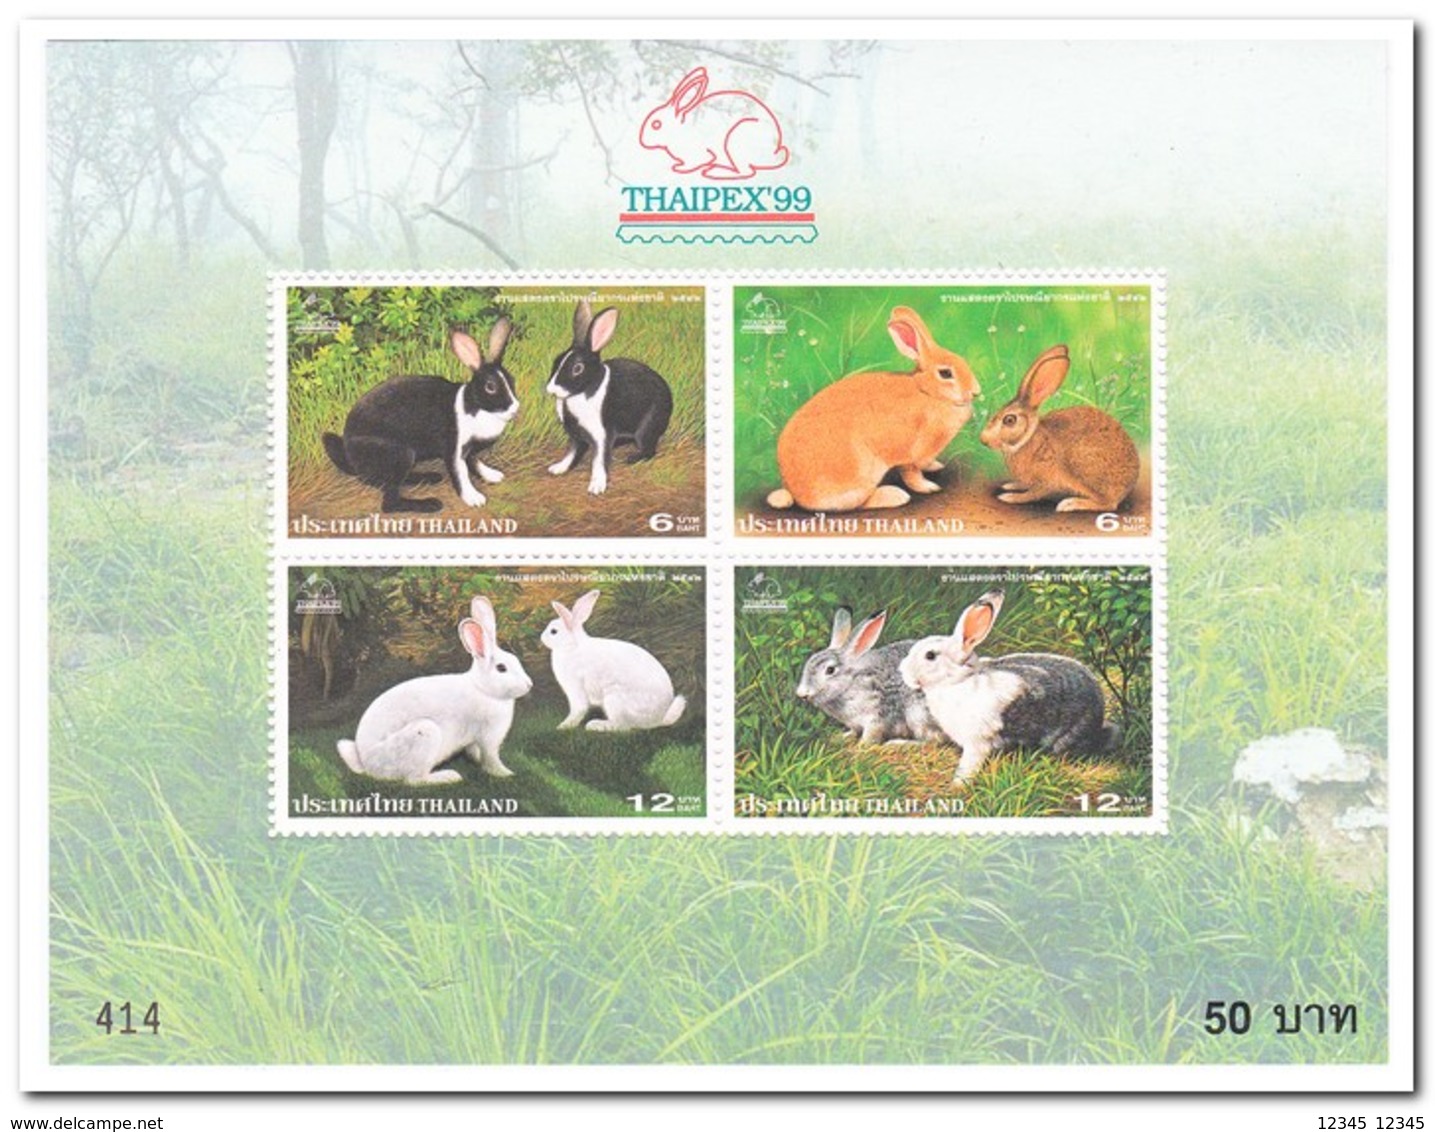 Thailand 1999, Postfris MNH, Rabbits - Thailand